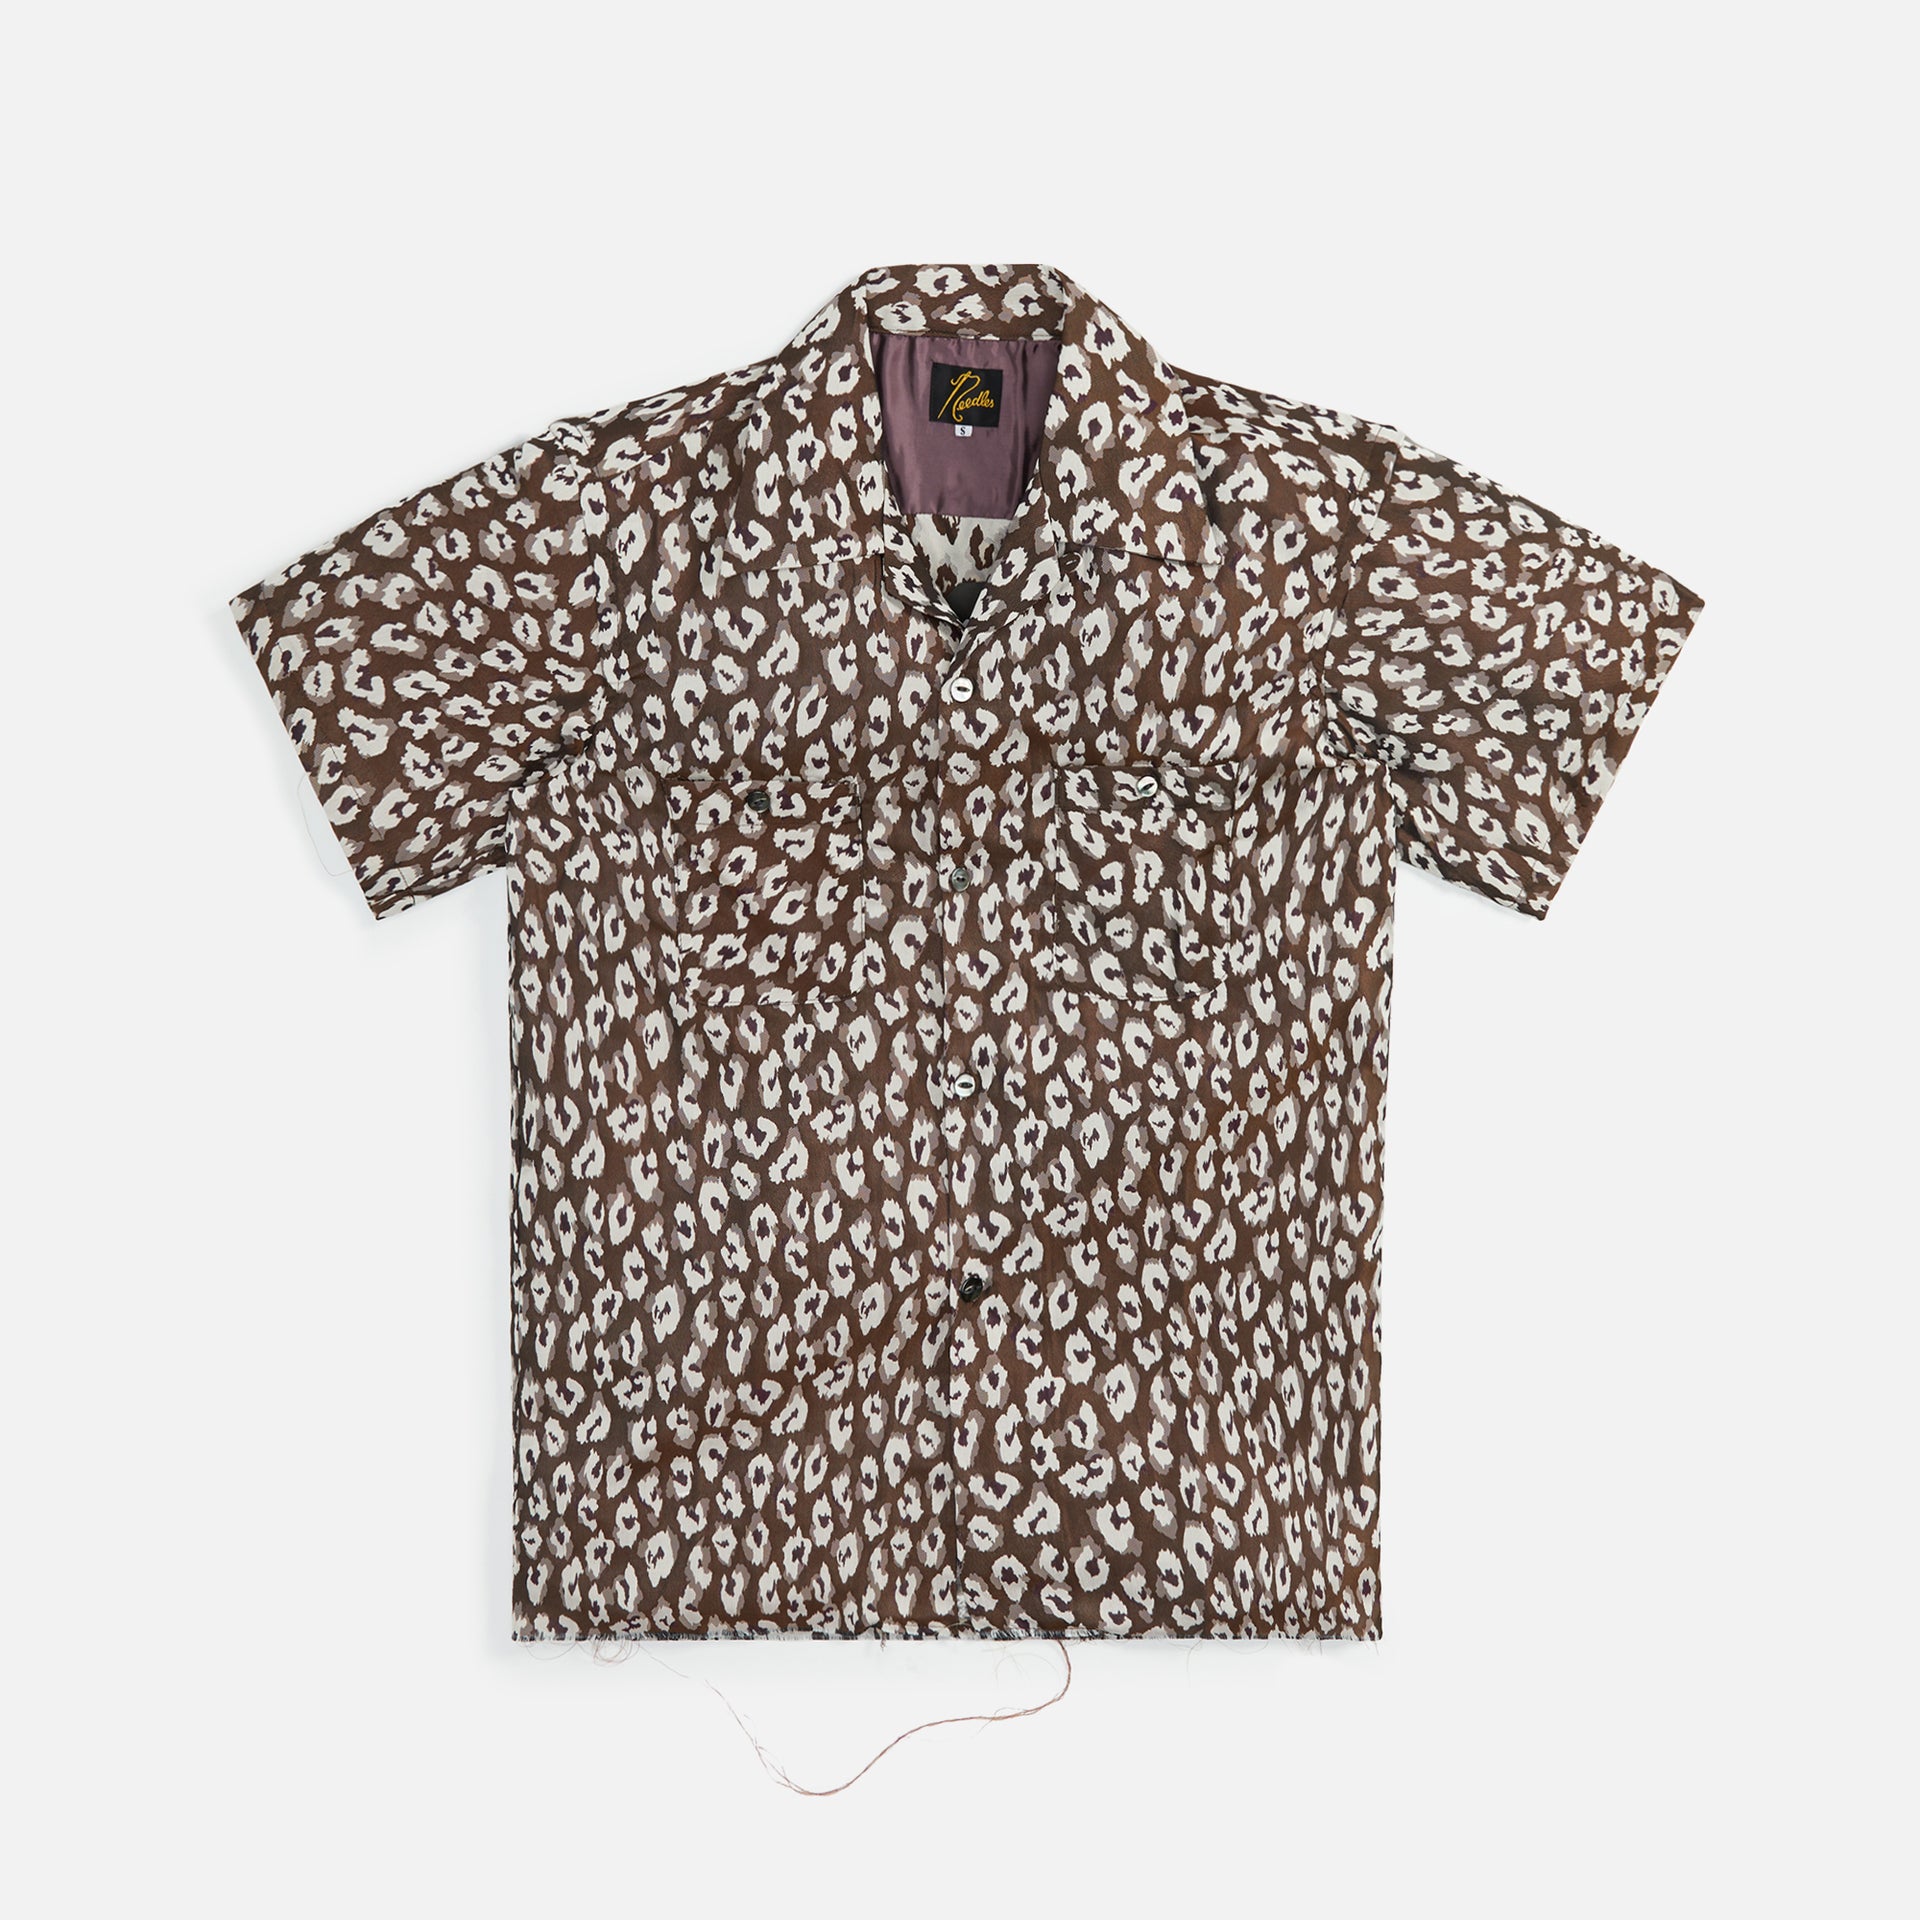 Needles C.O.B. Classic Shirt Jacquard - Leopard